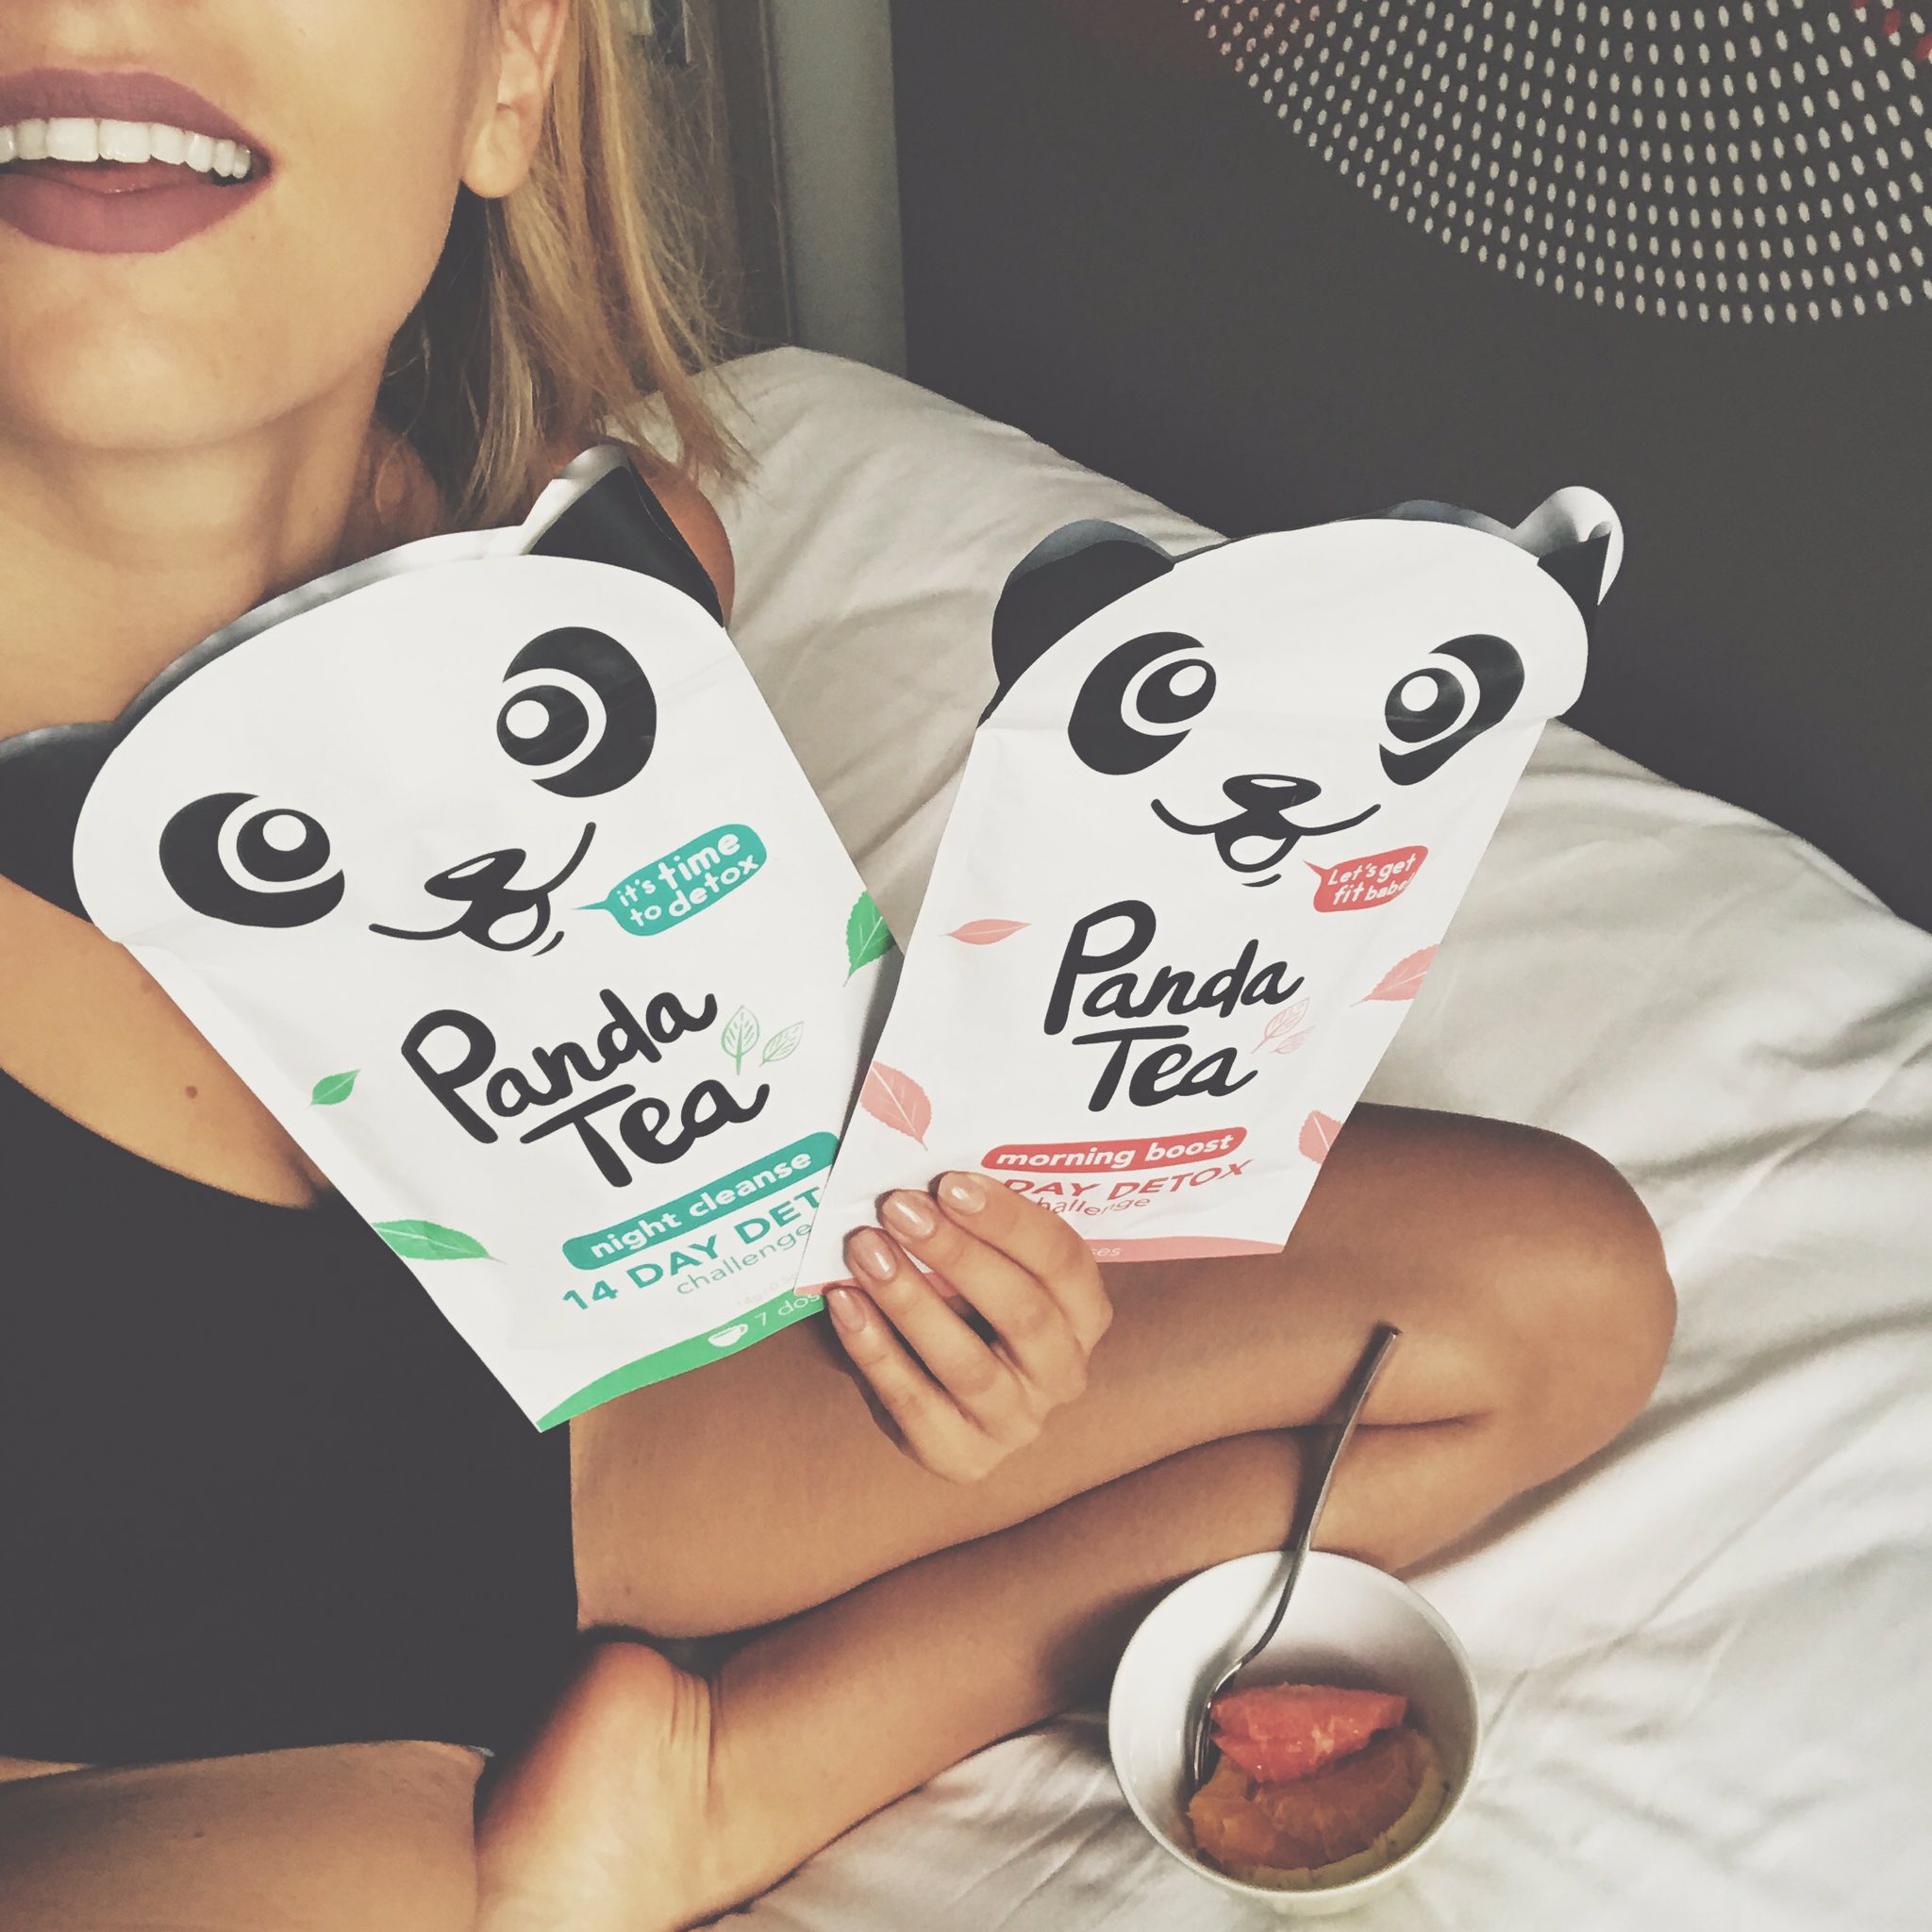 Panda Tea - Avis et Code Promo - Thé Detox